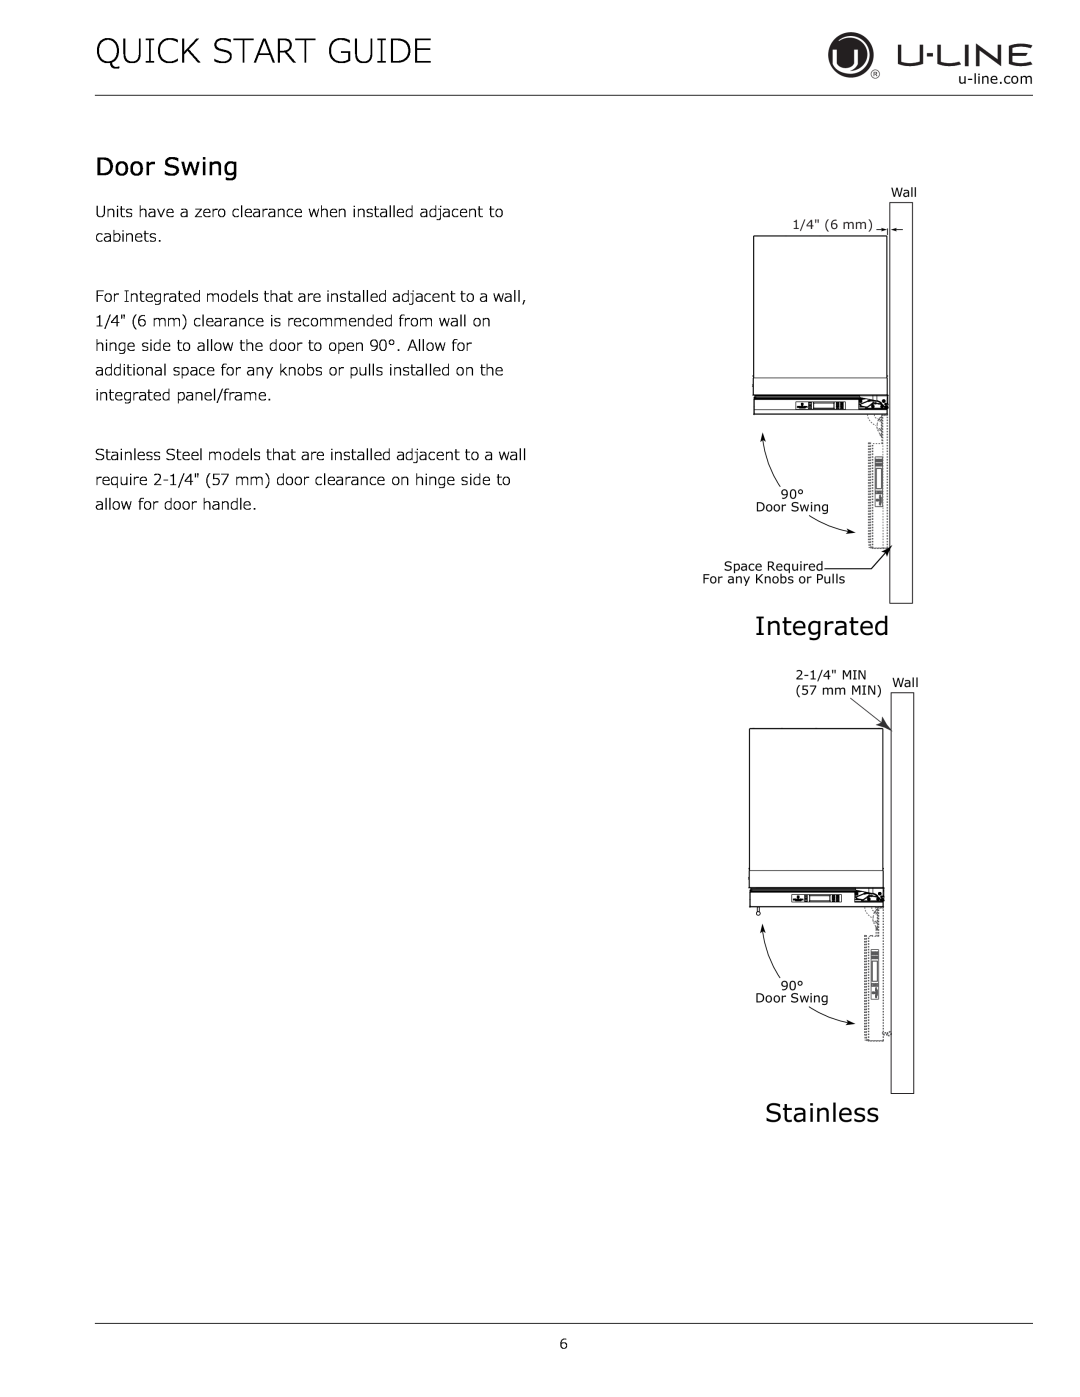 U-Line 3018 CLR  115 V / 60 Hz quick start Door Swing, Integrated, Stainless, Quick Start Guide, u-line.com 